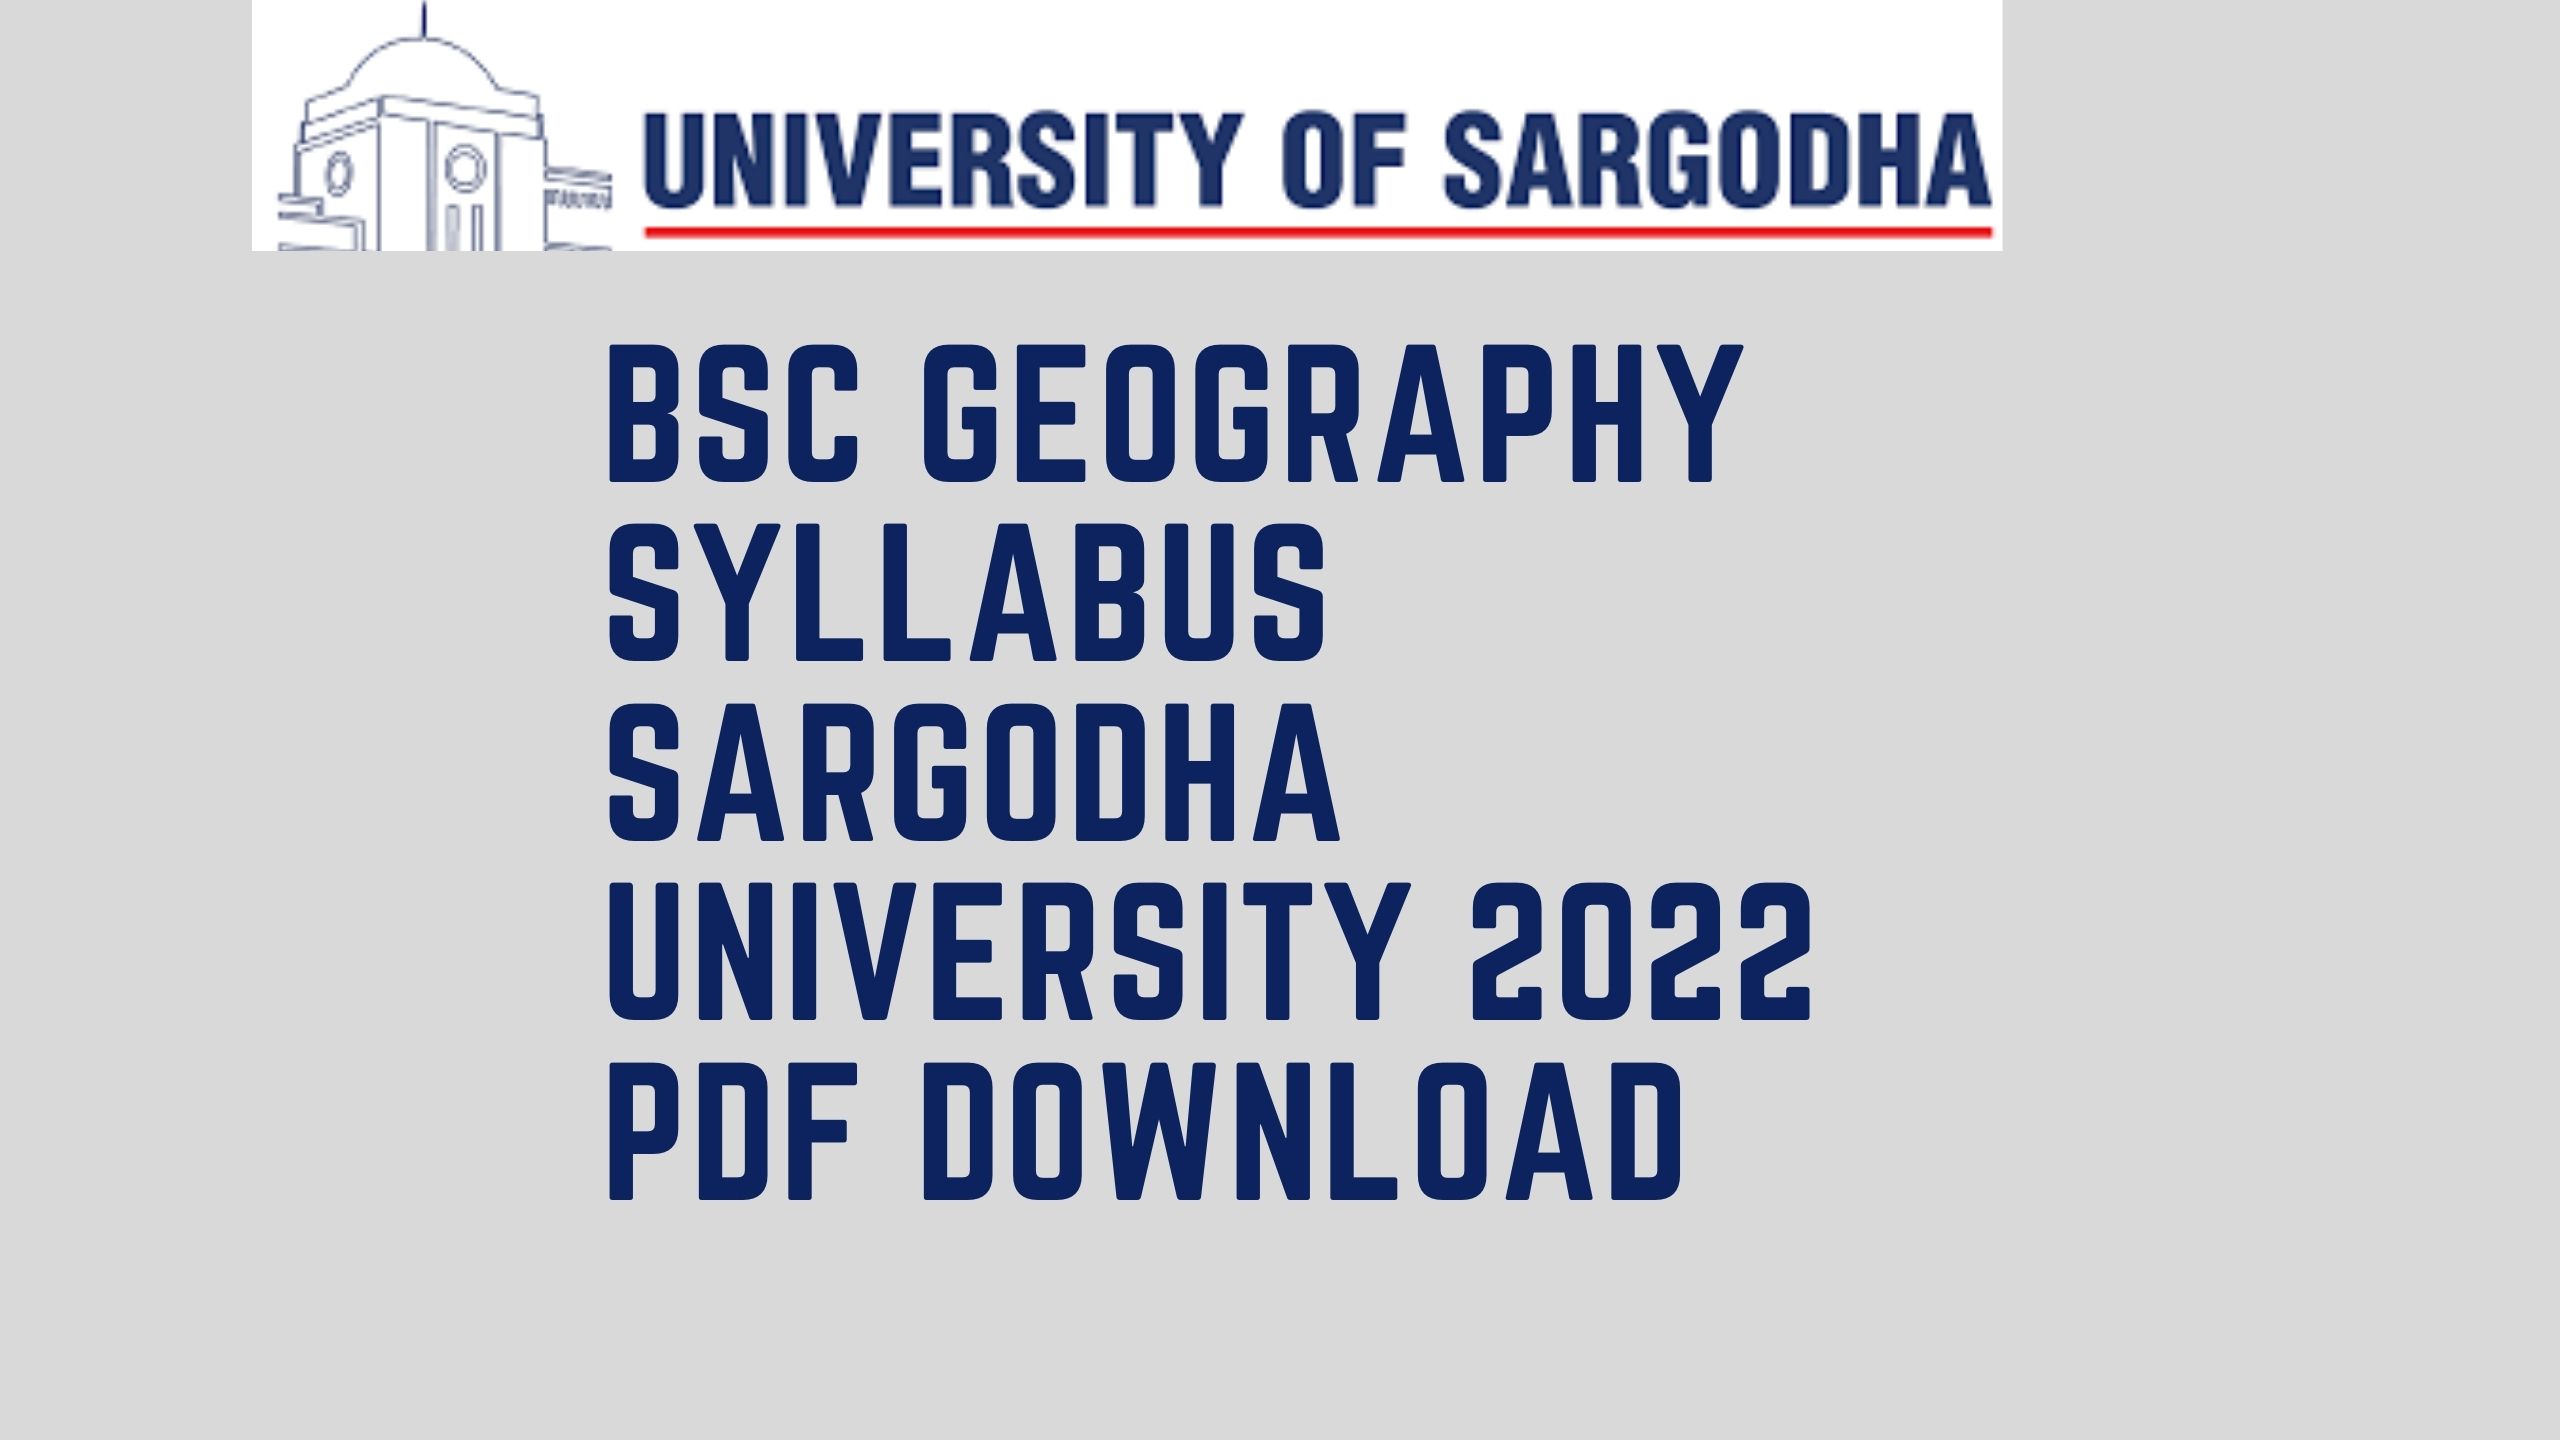 BSc Geography Syllabus Sargodha University